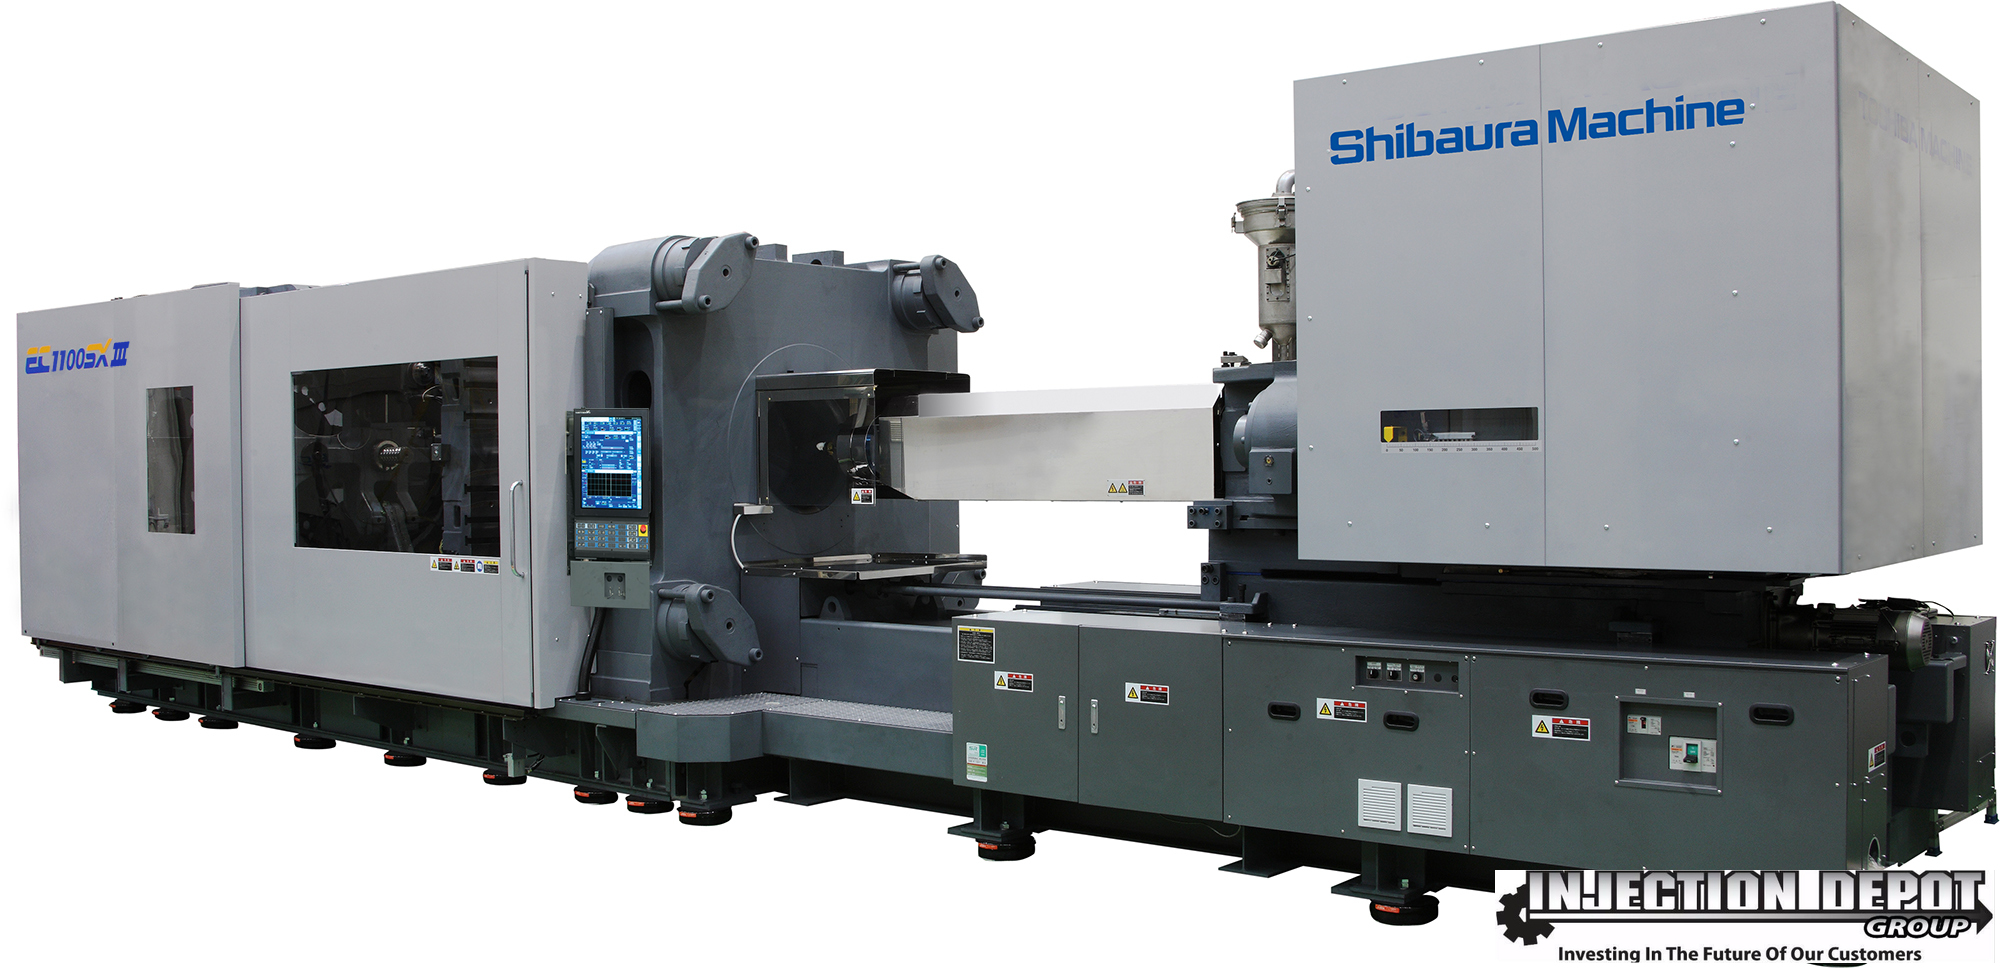 SHIBAURA MACHINE EC1100SXIIIV70-i61 AT Horizontal Injection Moulding Machines | INJECTION DEPOT GROUP